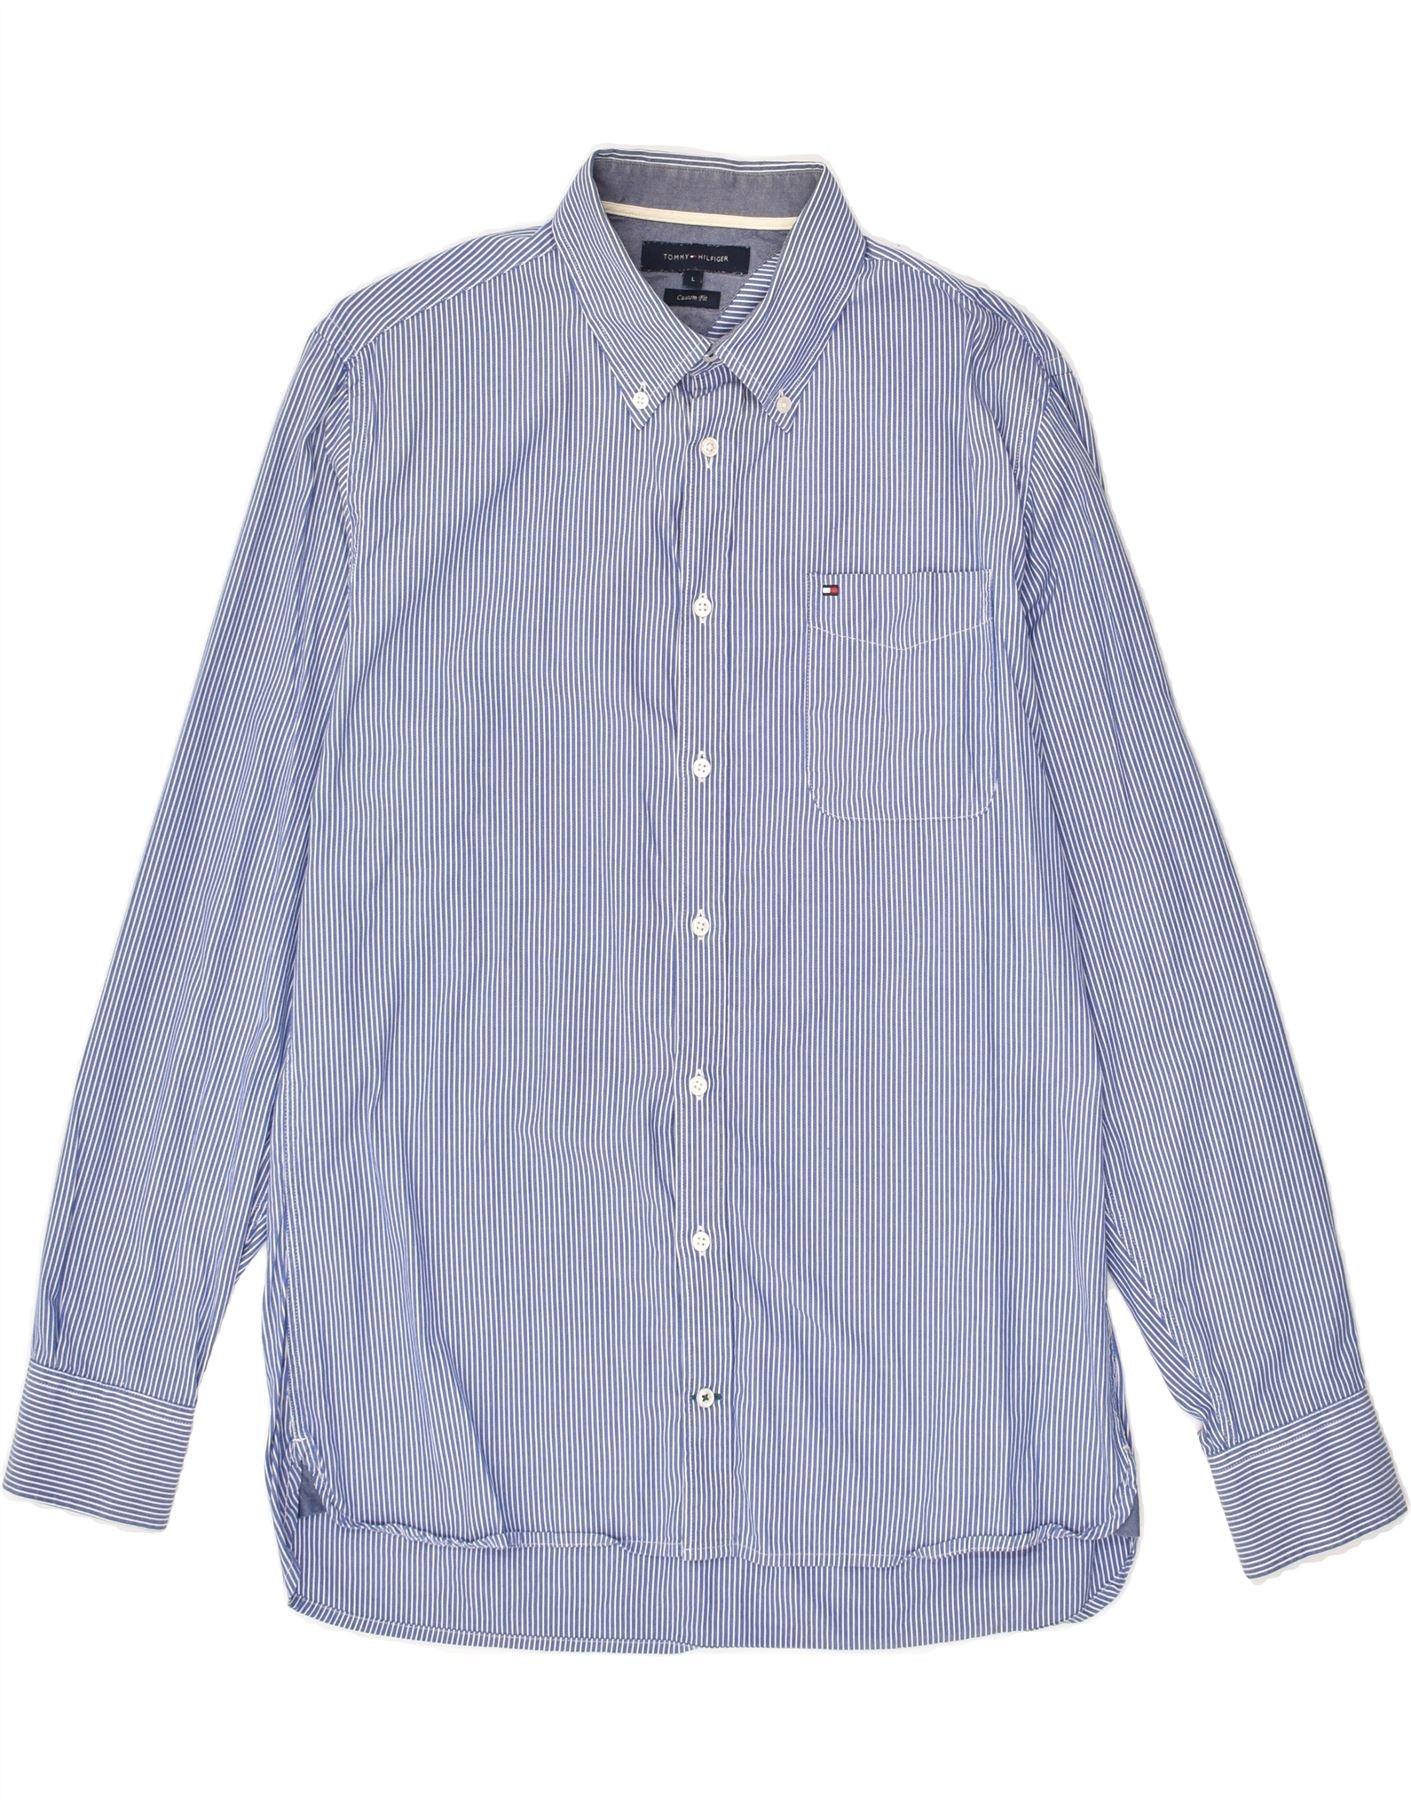 NAUTICA Mens 80'S Two Ply Short Sleeve Shirt XL Blue Check Cotton